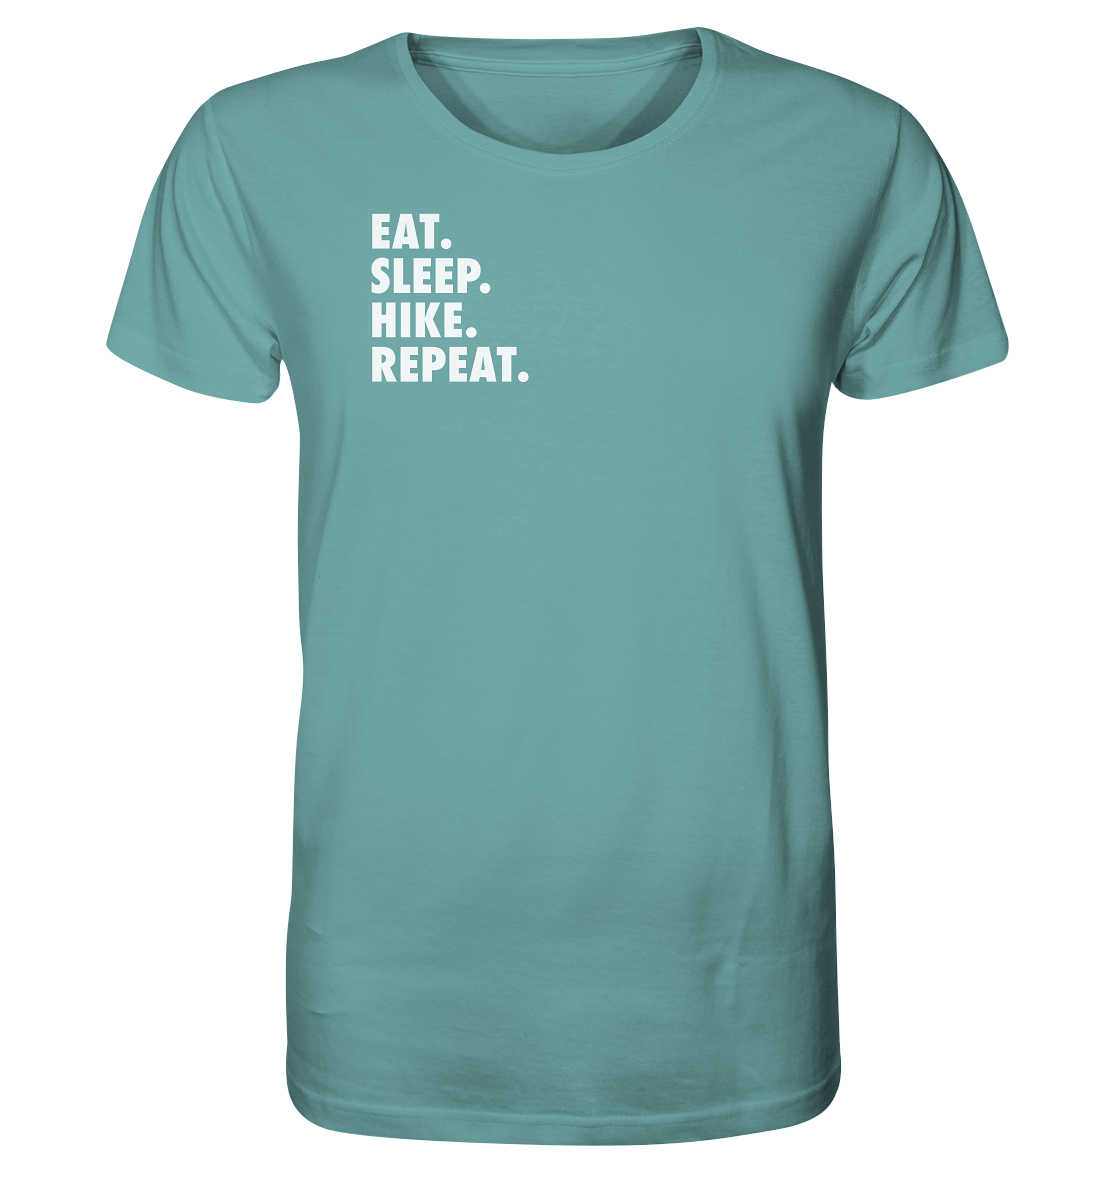 Eat. Sleep. Hike. Repeat. - Organic Shirt